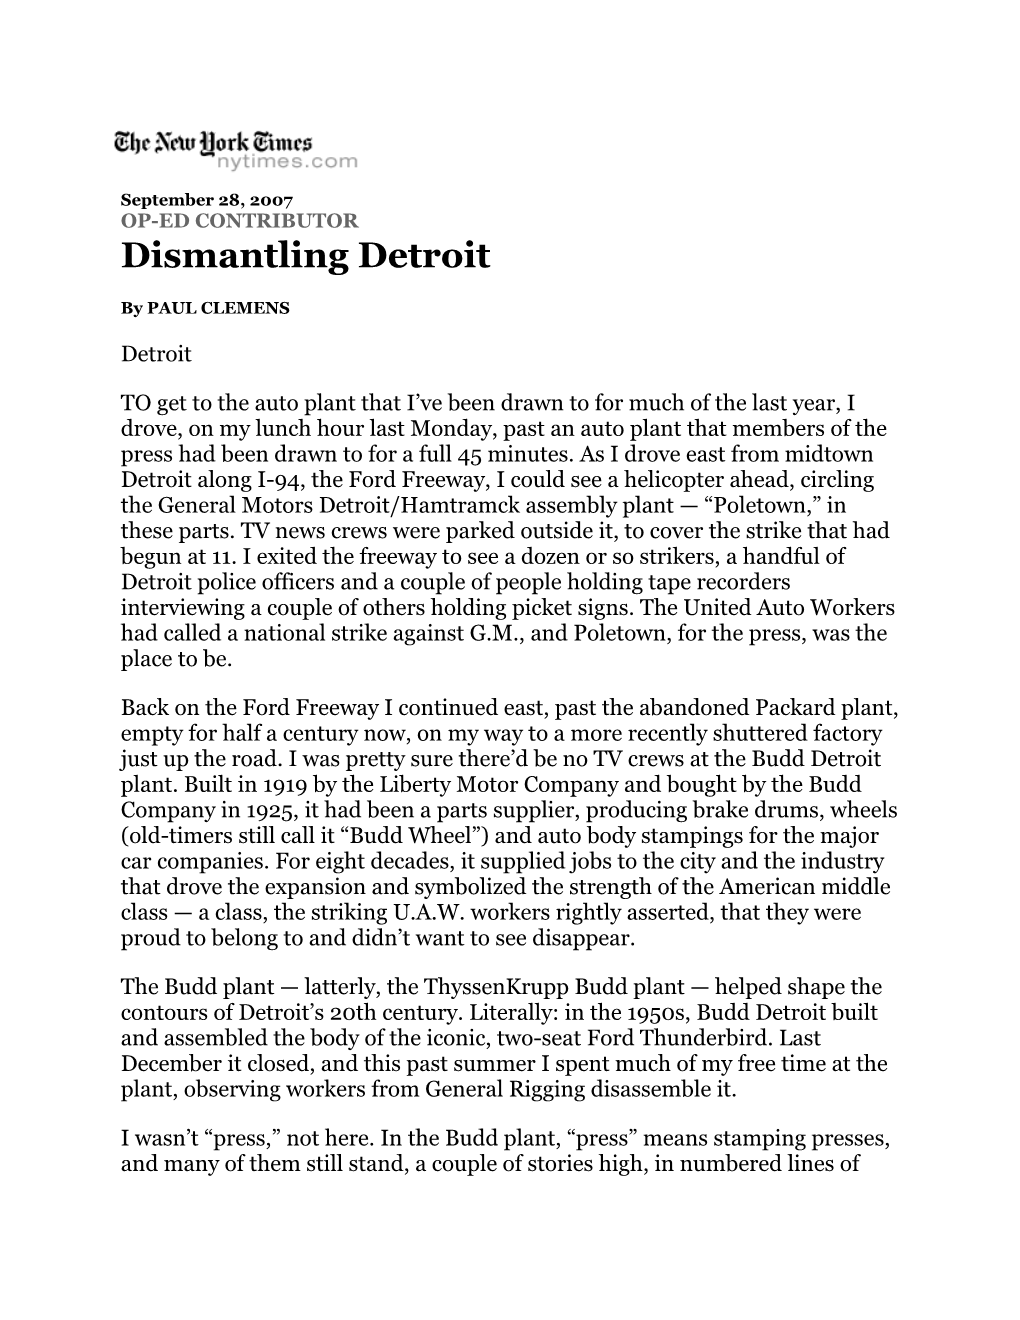 Dismantling Detroit